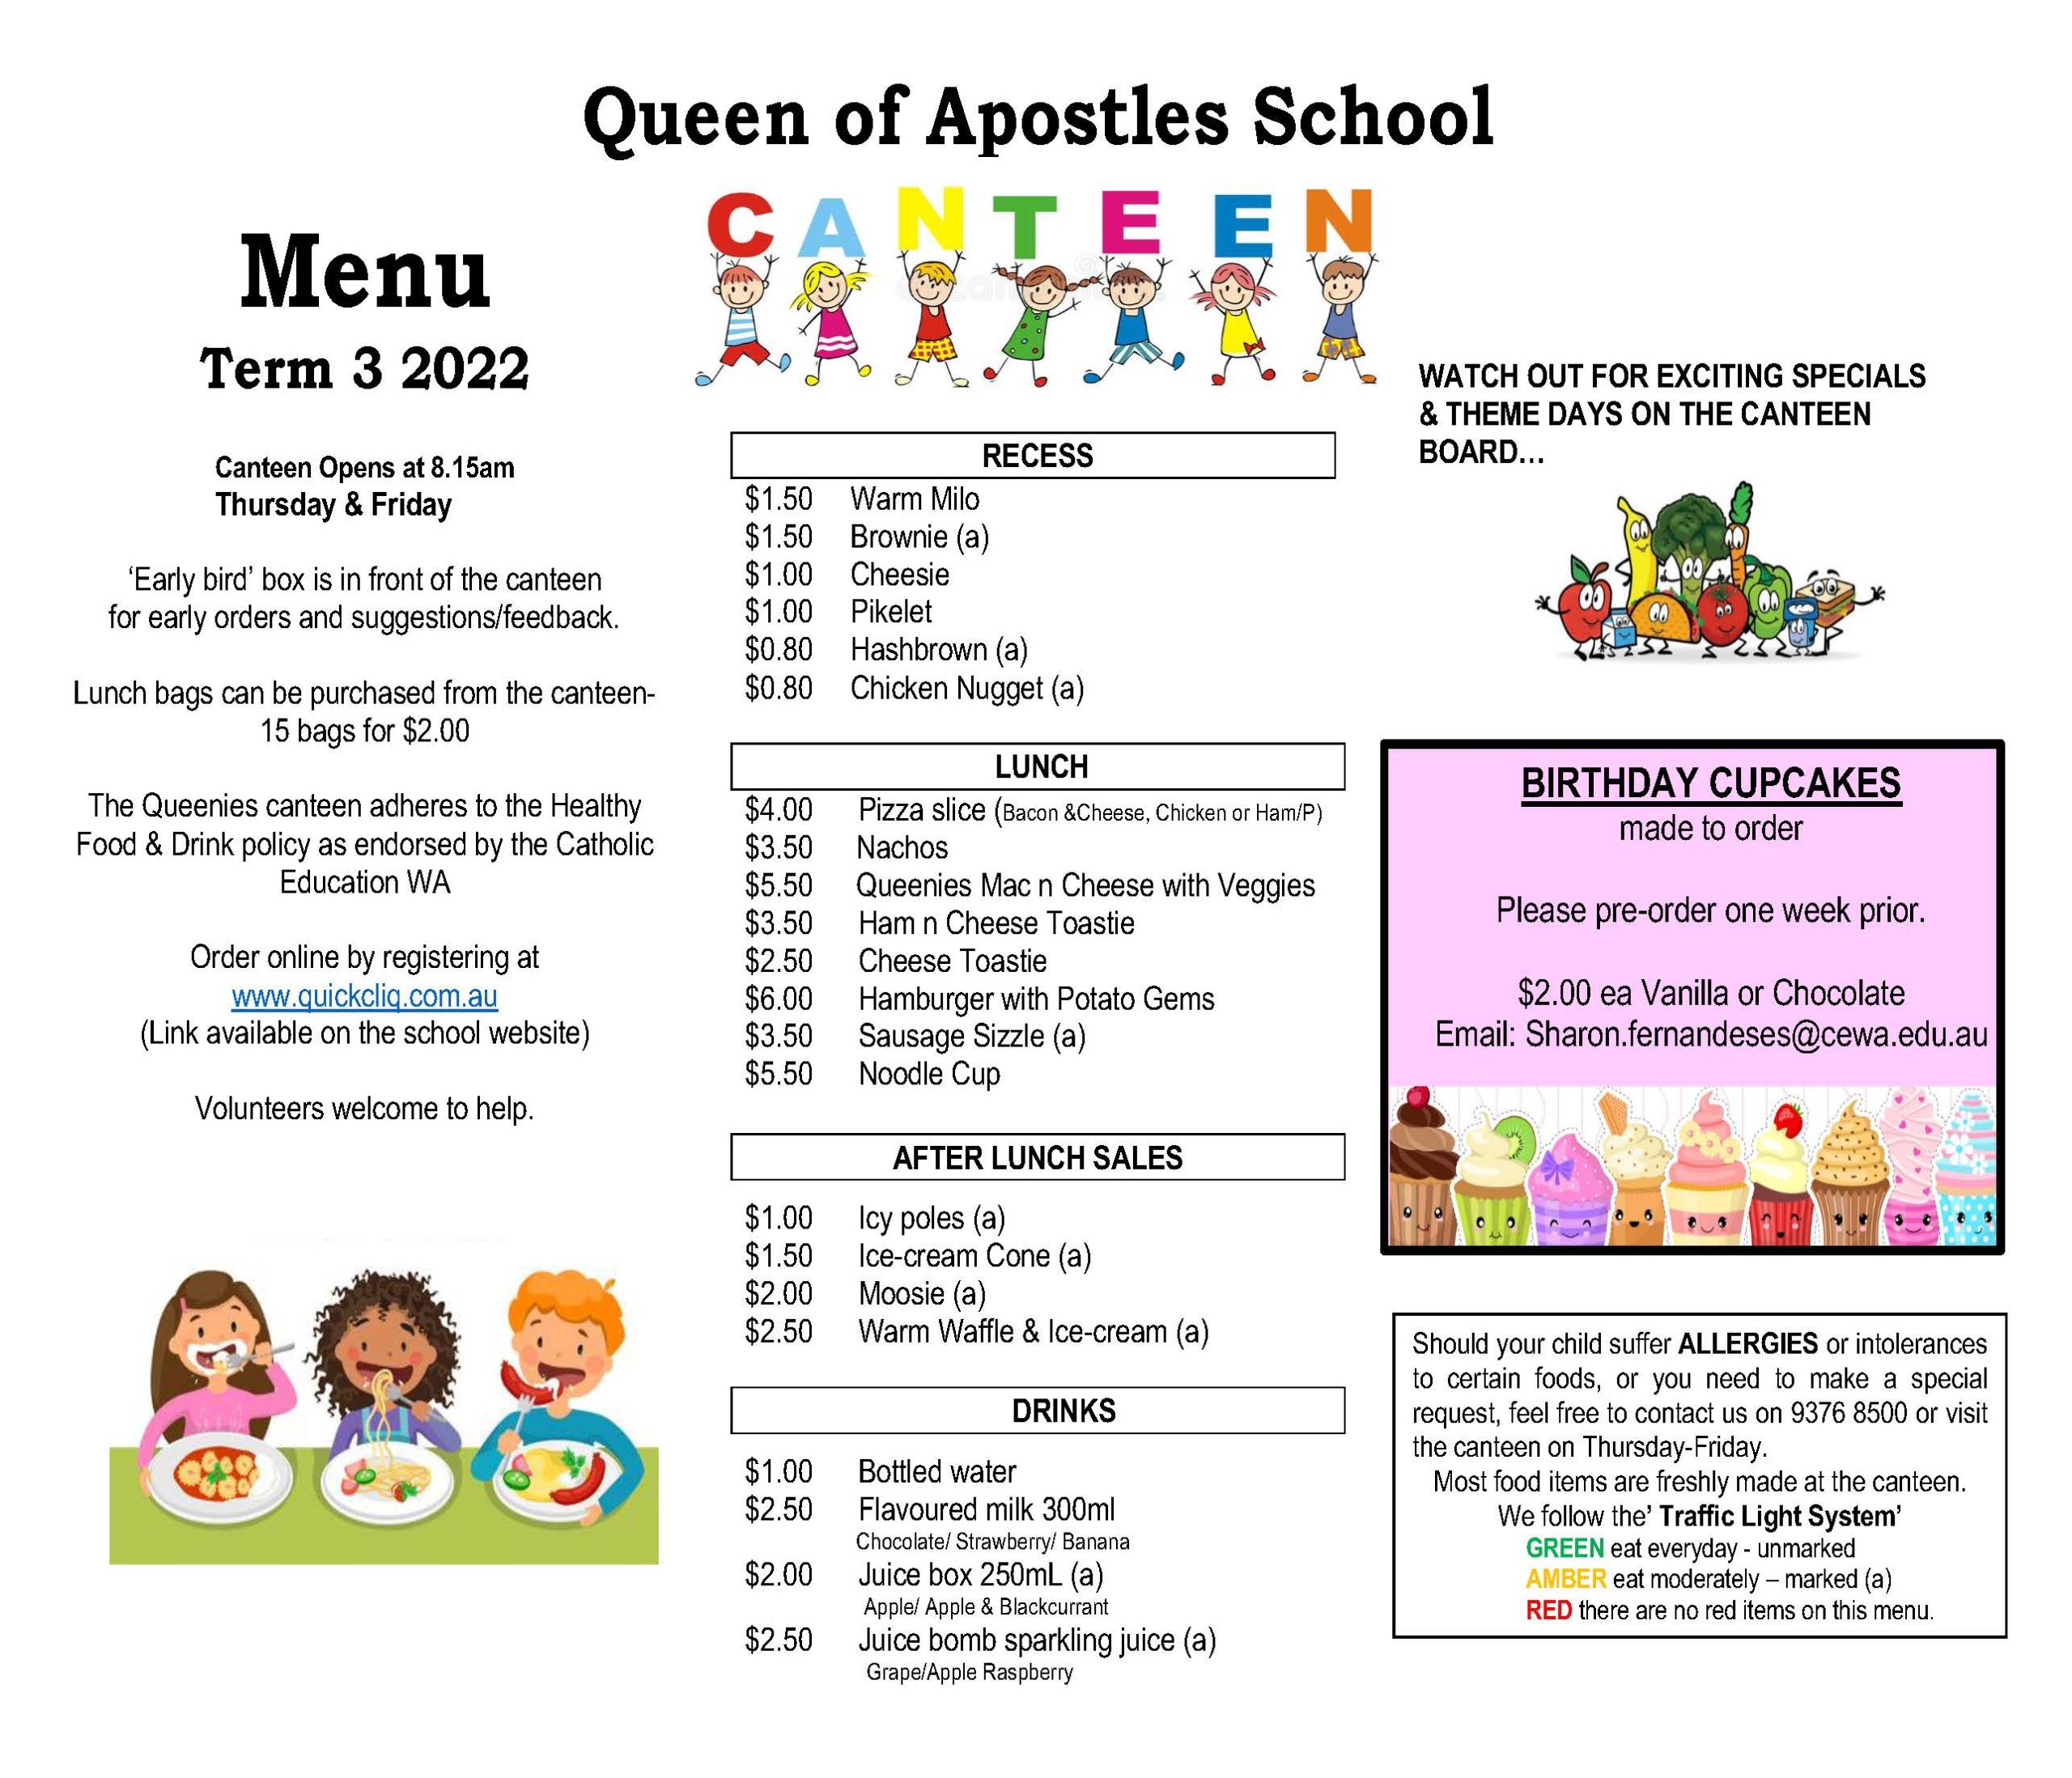 Canteen Queen of Apostles School